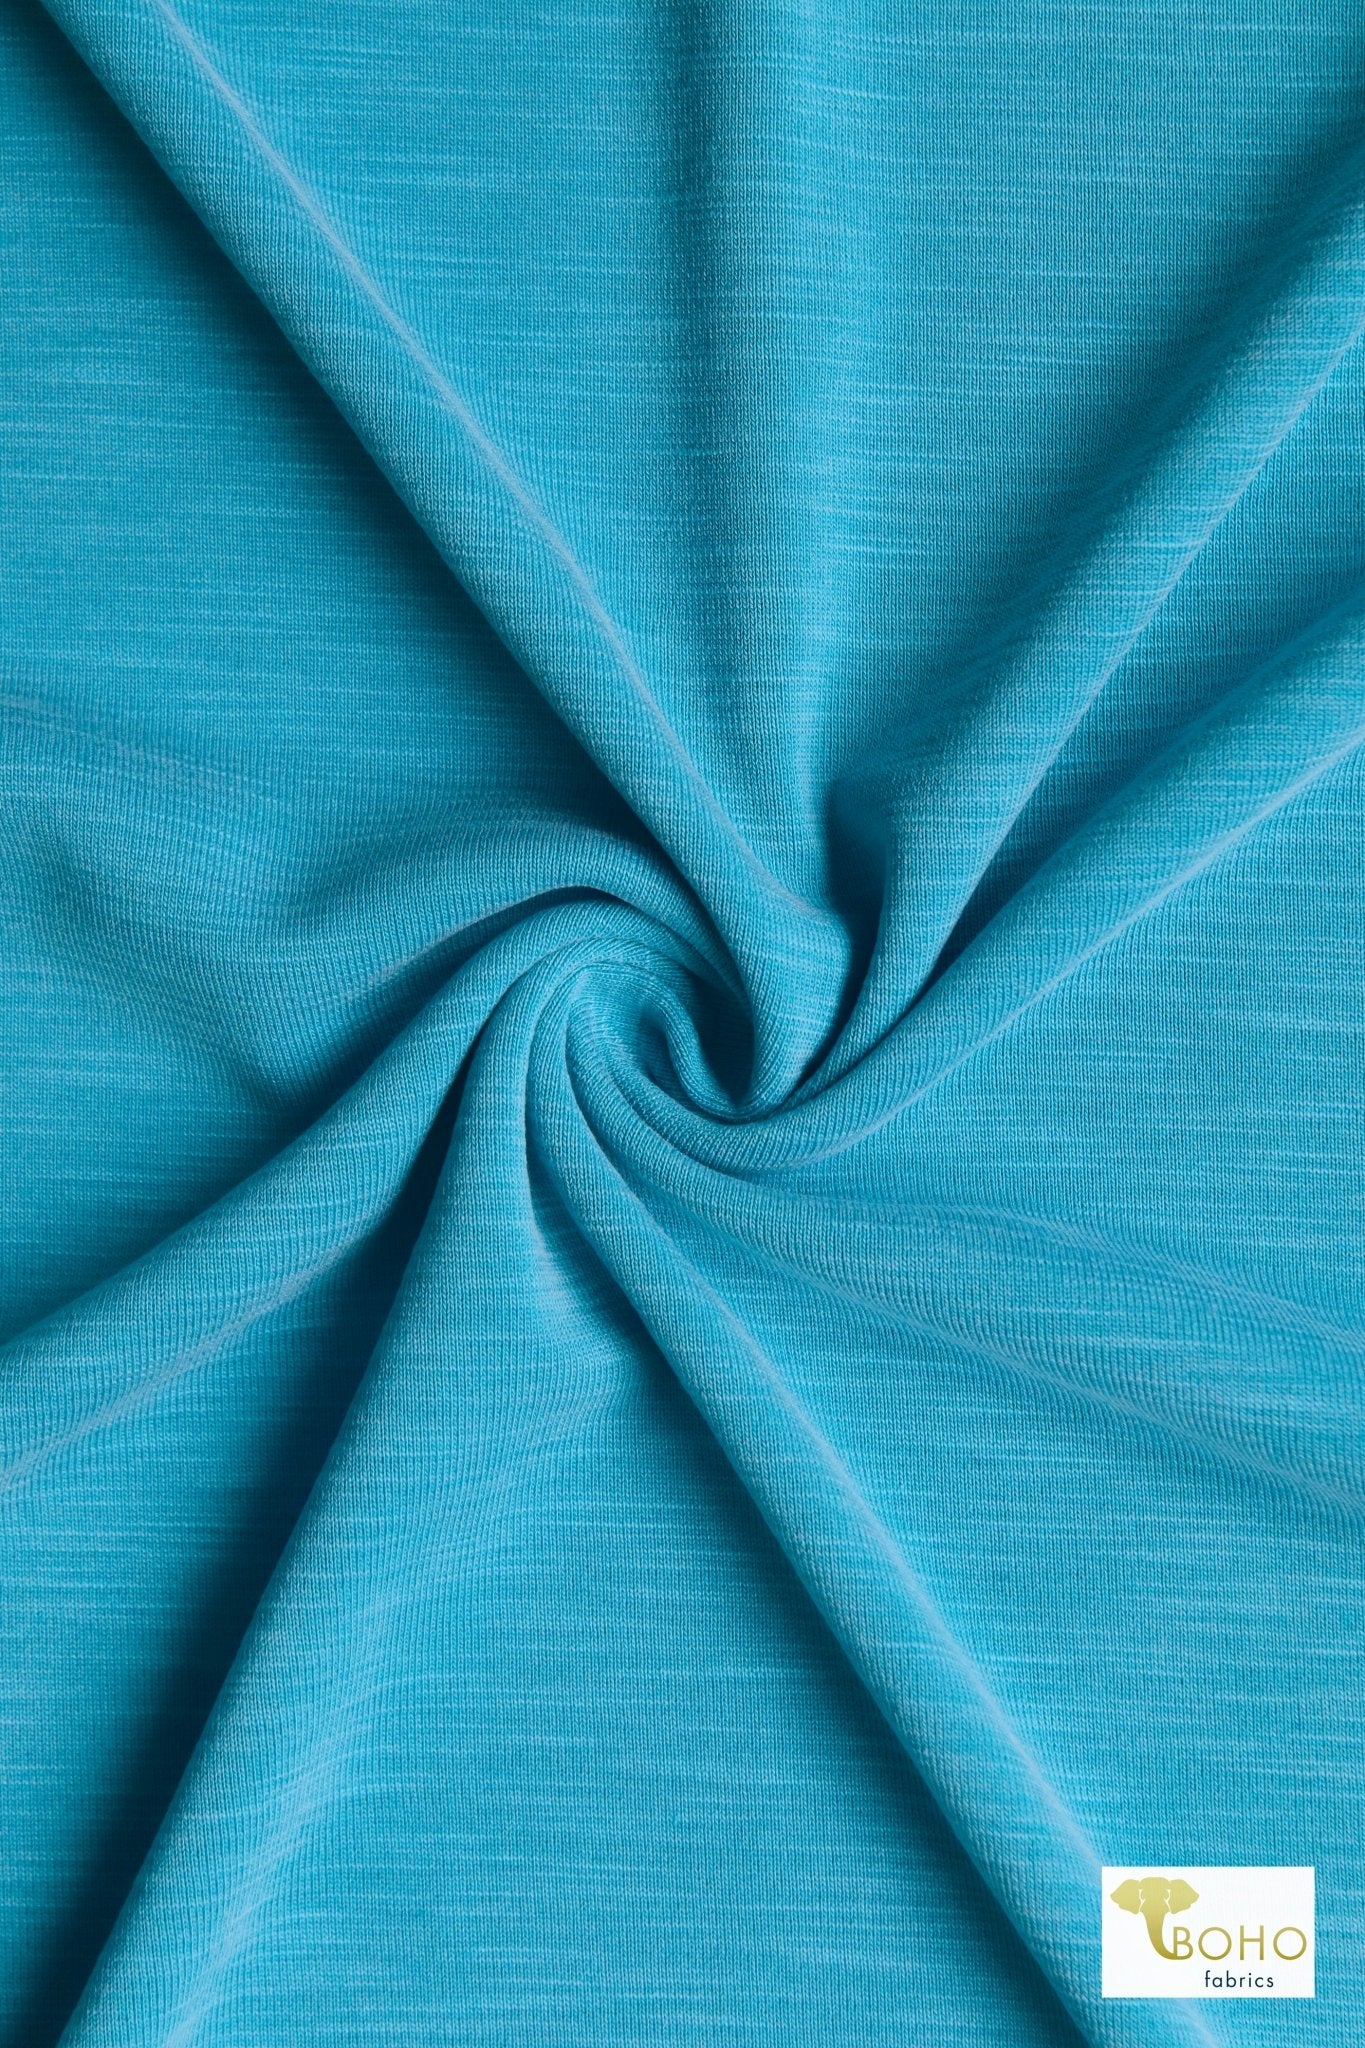 Slub, Sea Blue, Cupro Knit Fabric - Boho Fabrics - Cupro, Knit Fabric